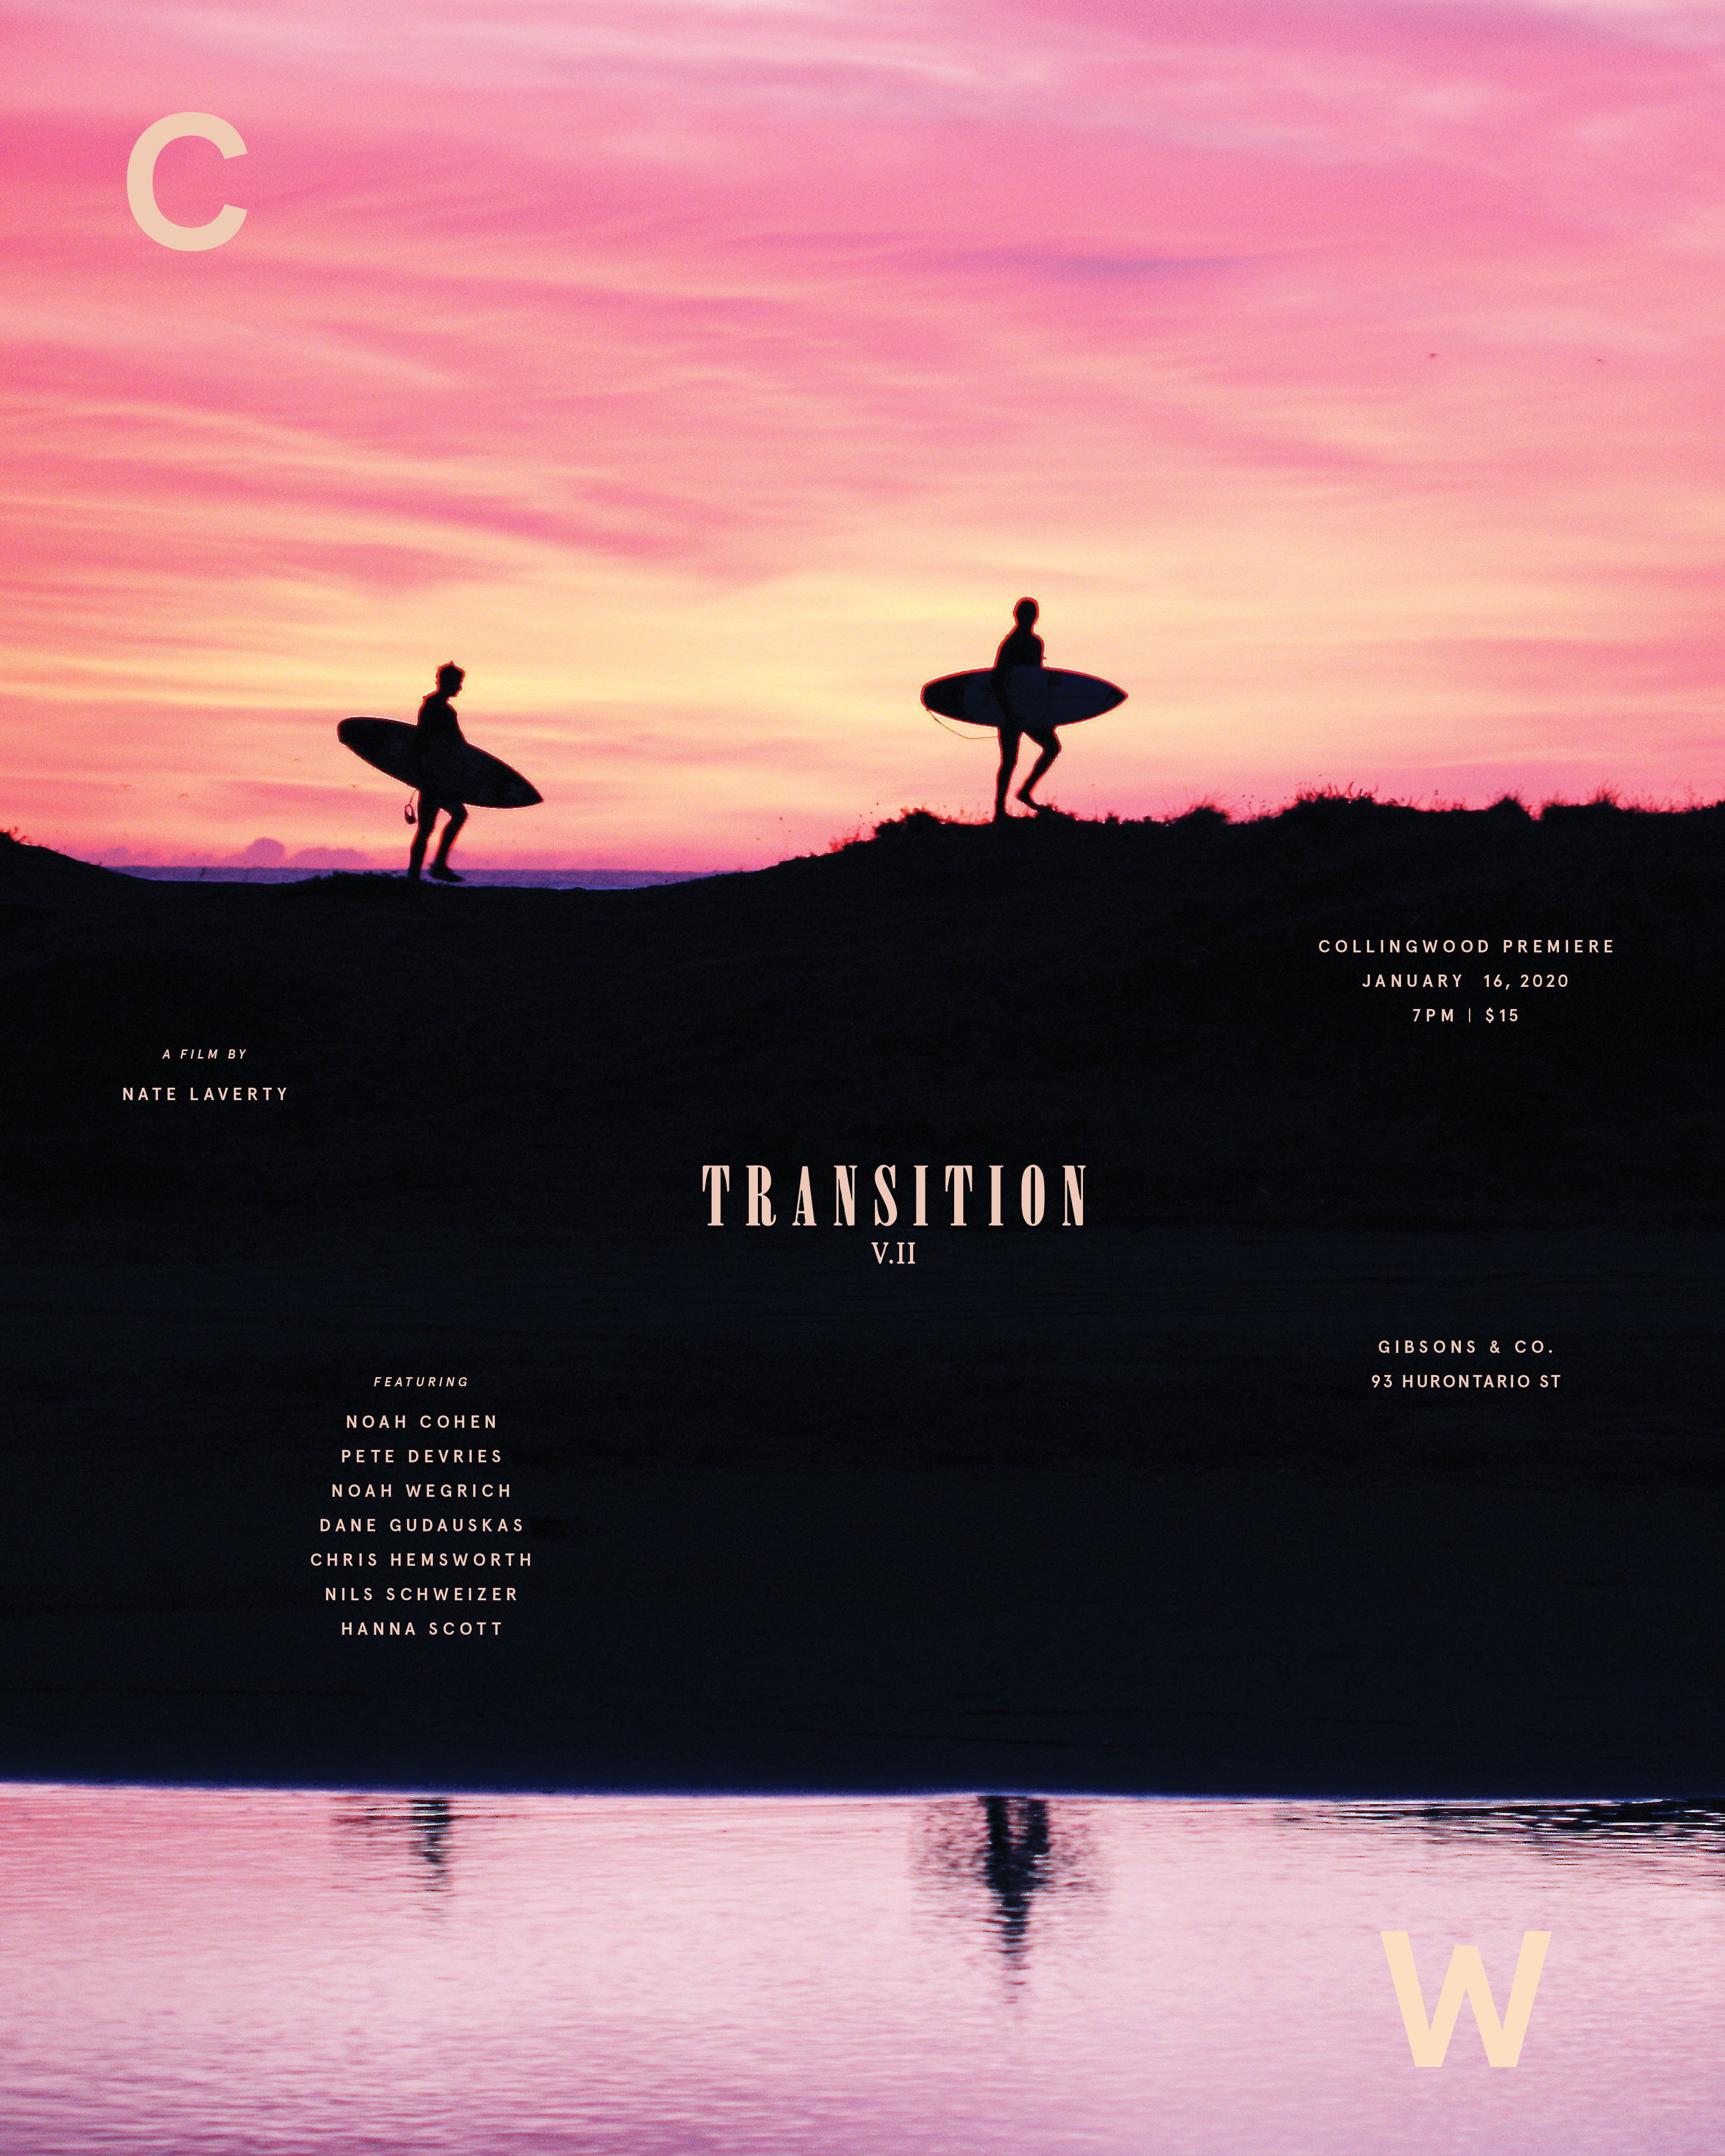 Transition II Surf Film Premiere in Collingwood